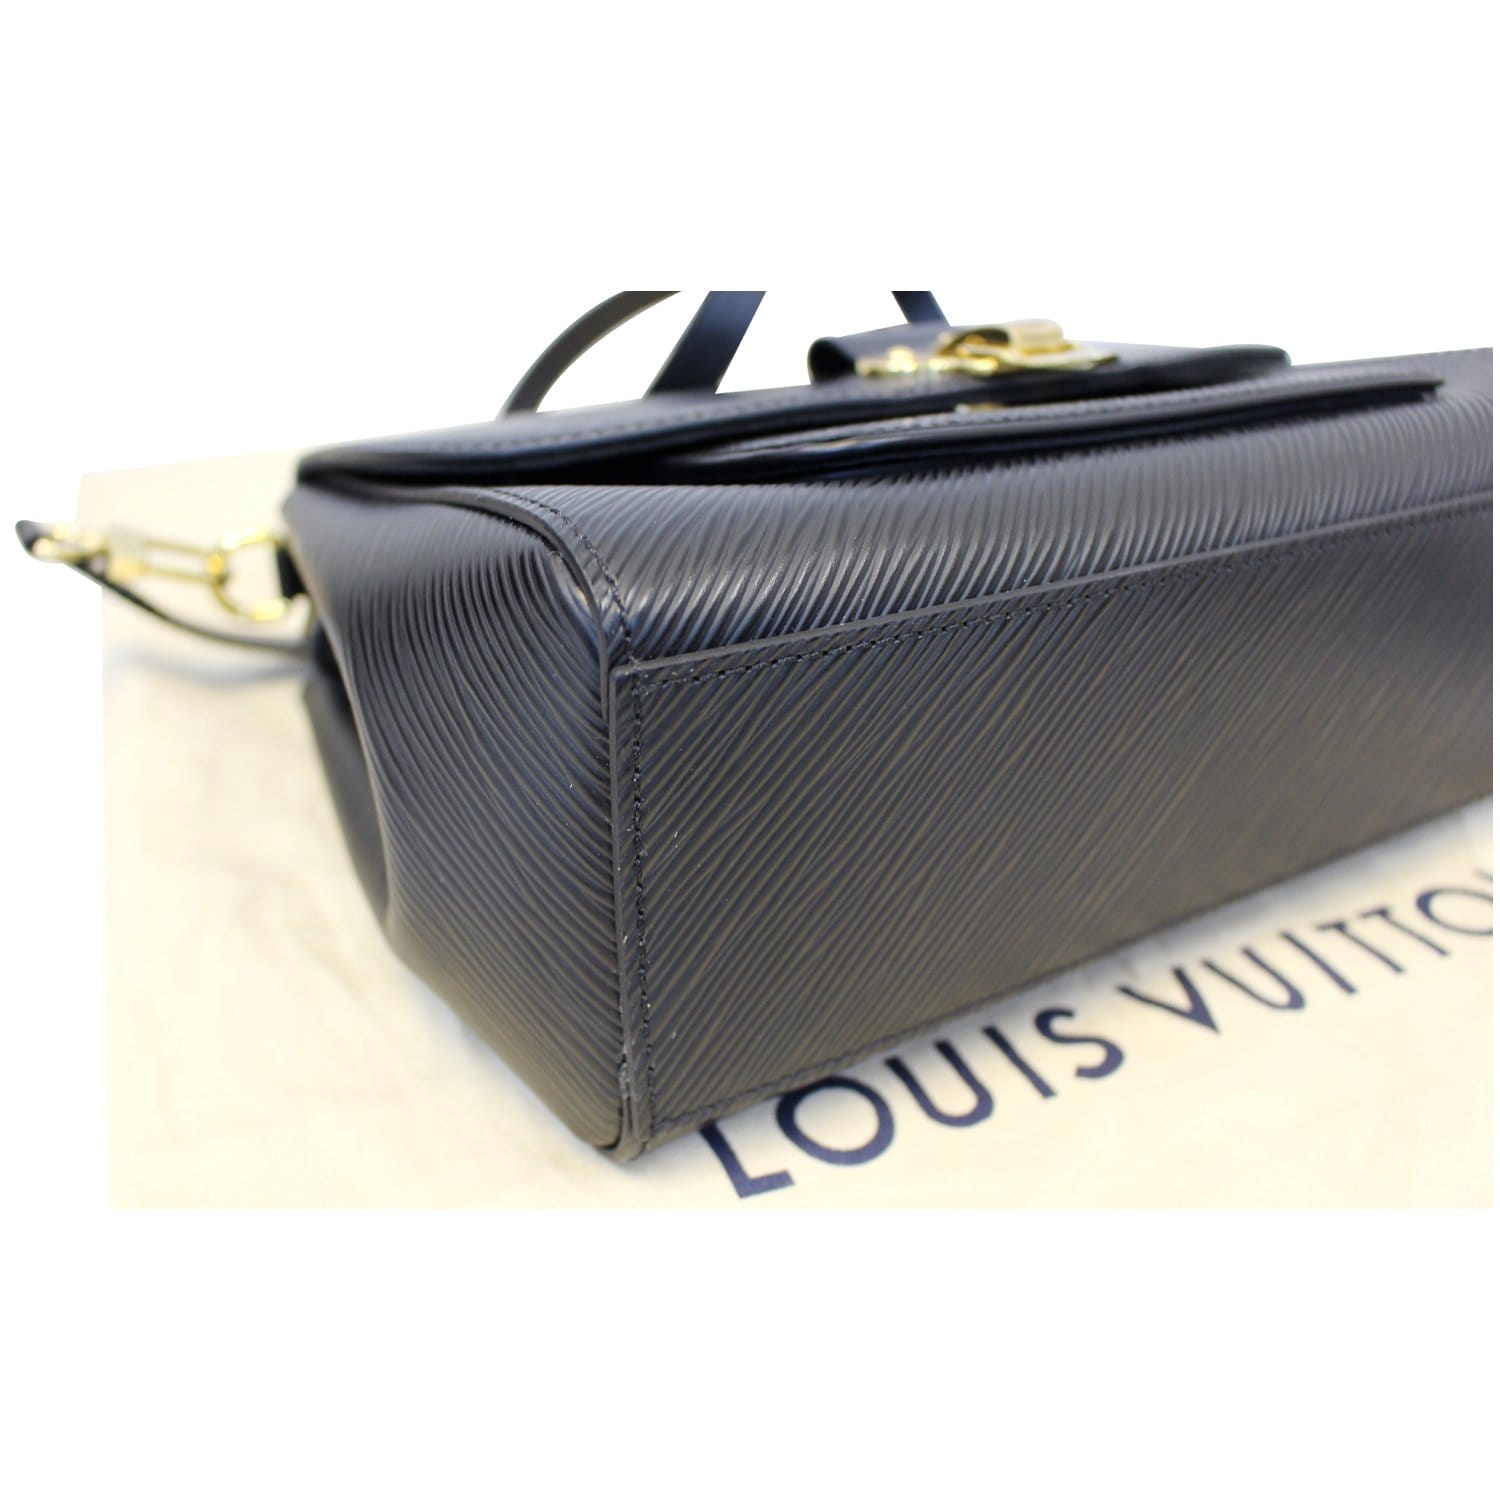 Louis Vuitton Epi Concorde bags Webstore product code: 💙AO17268